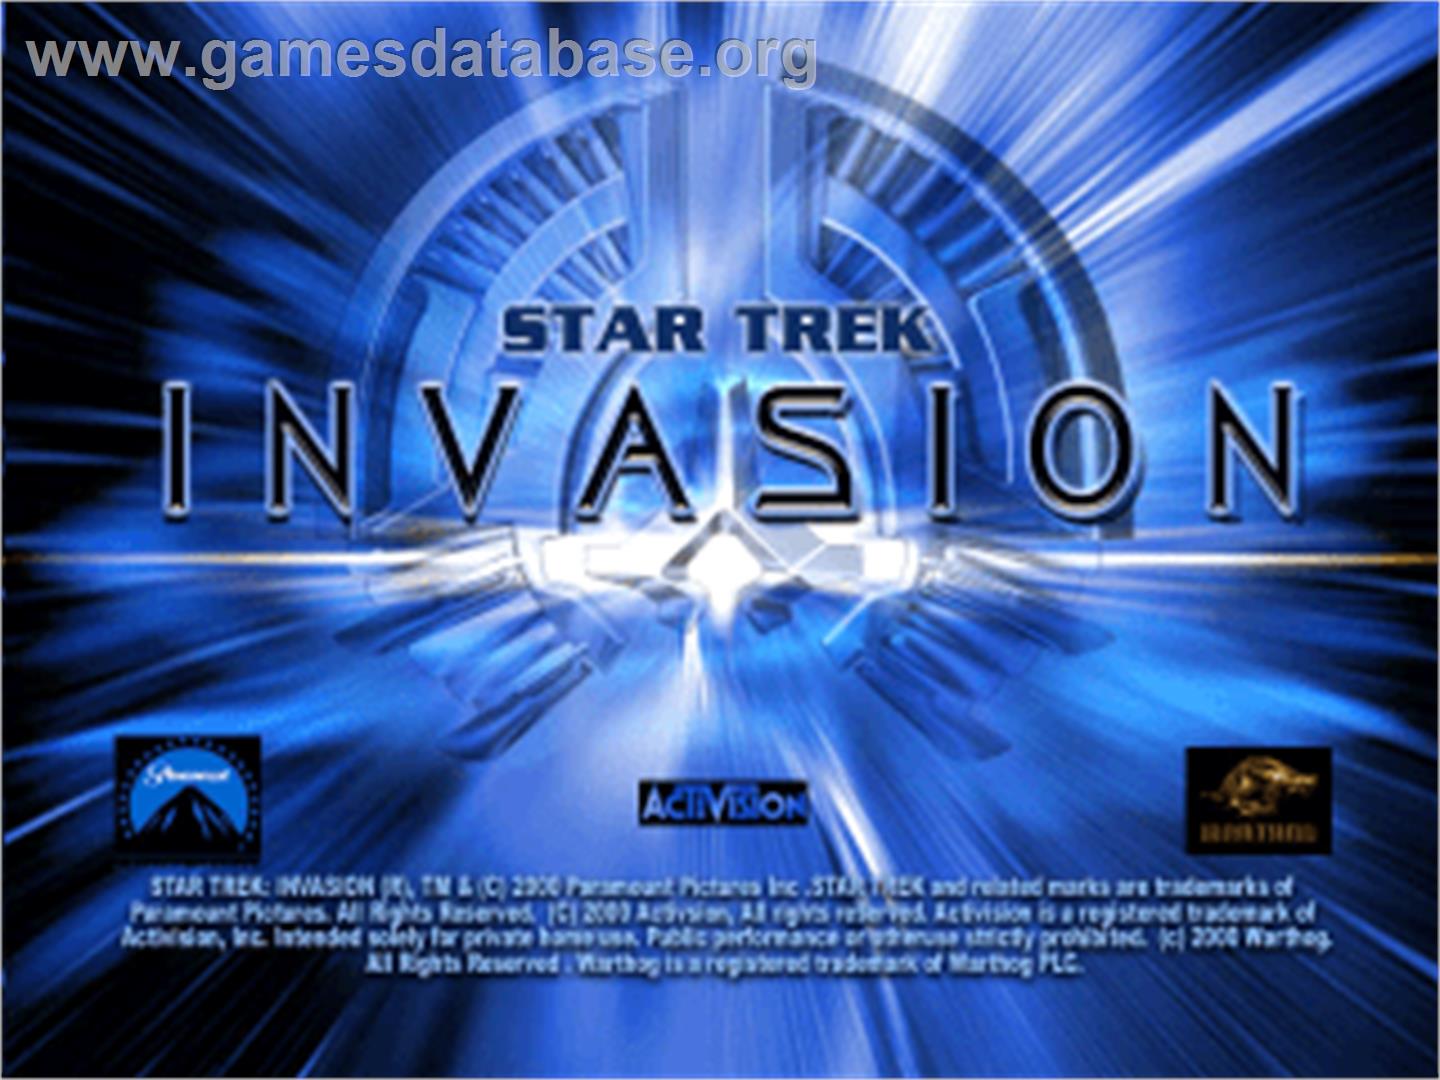 Star Trek: Invasion - Sony Playstation - Artwork - Title Screen